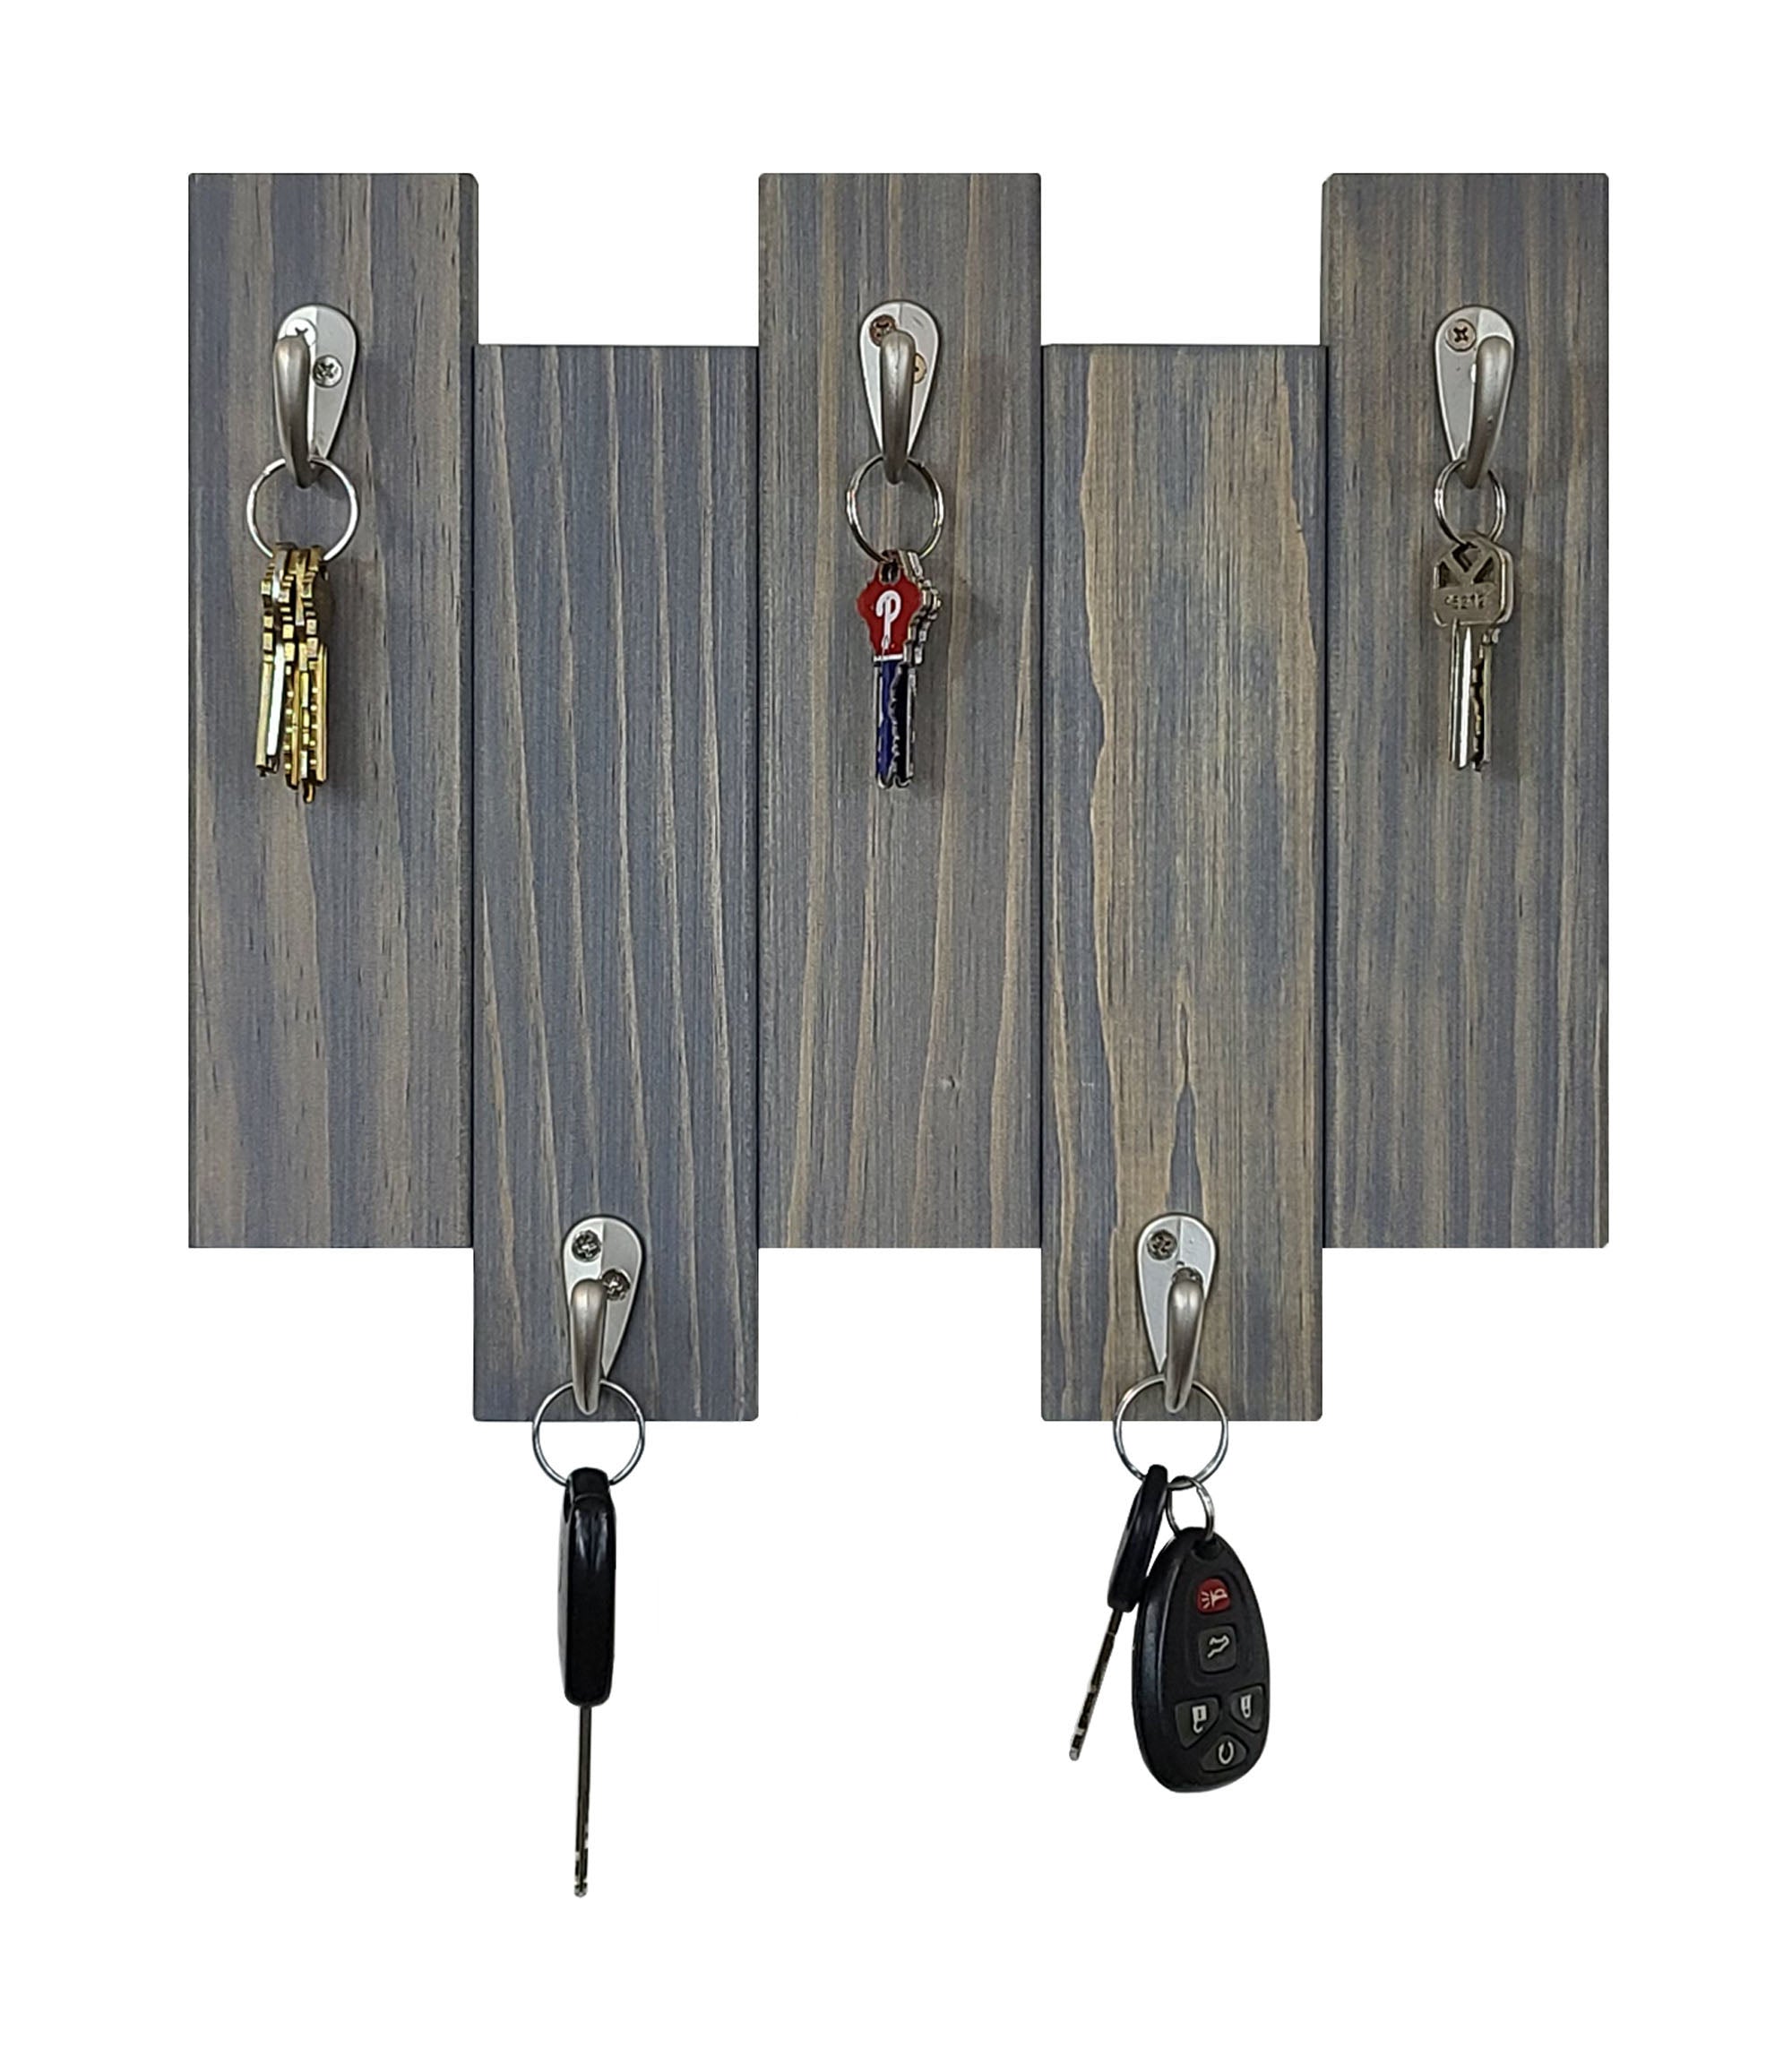 Pike Rustic Wall Key Hook Rack, Handmade in the USA